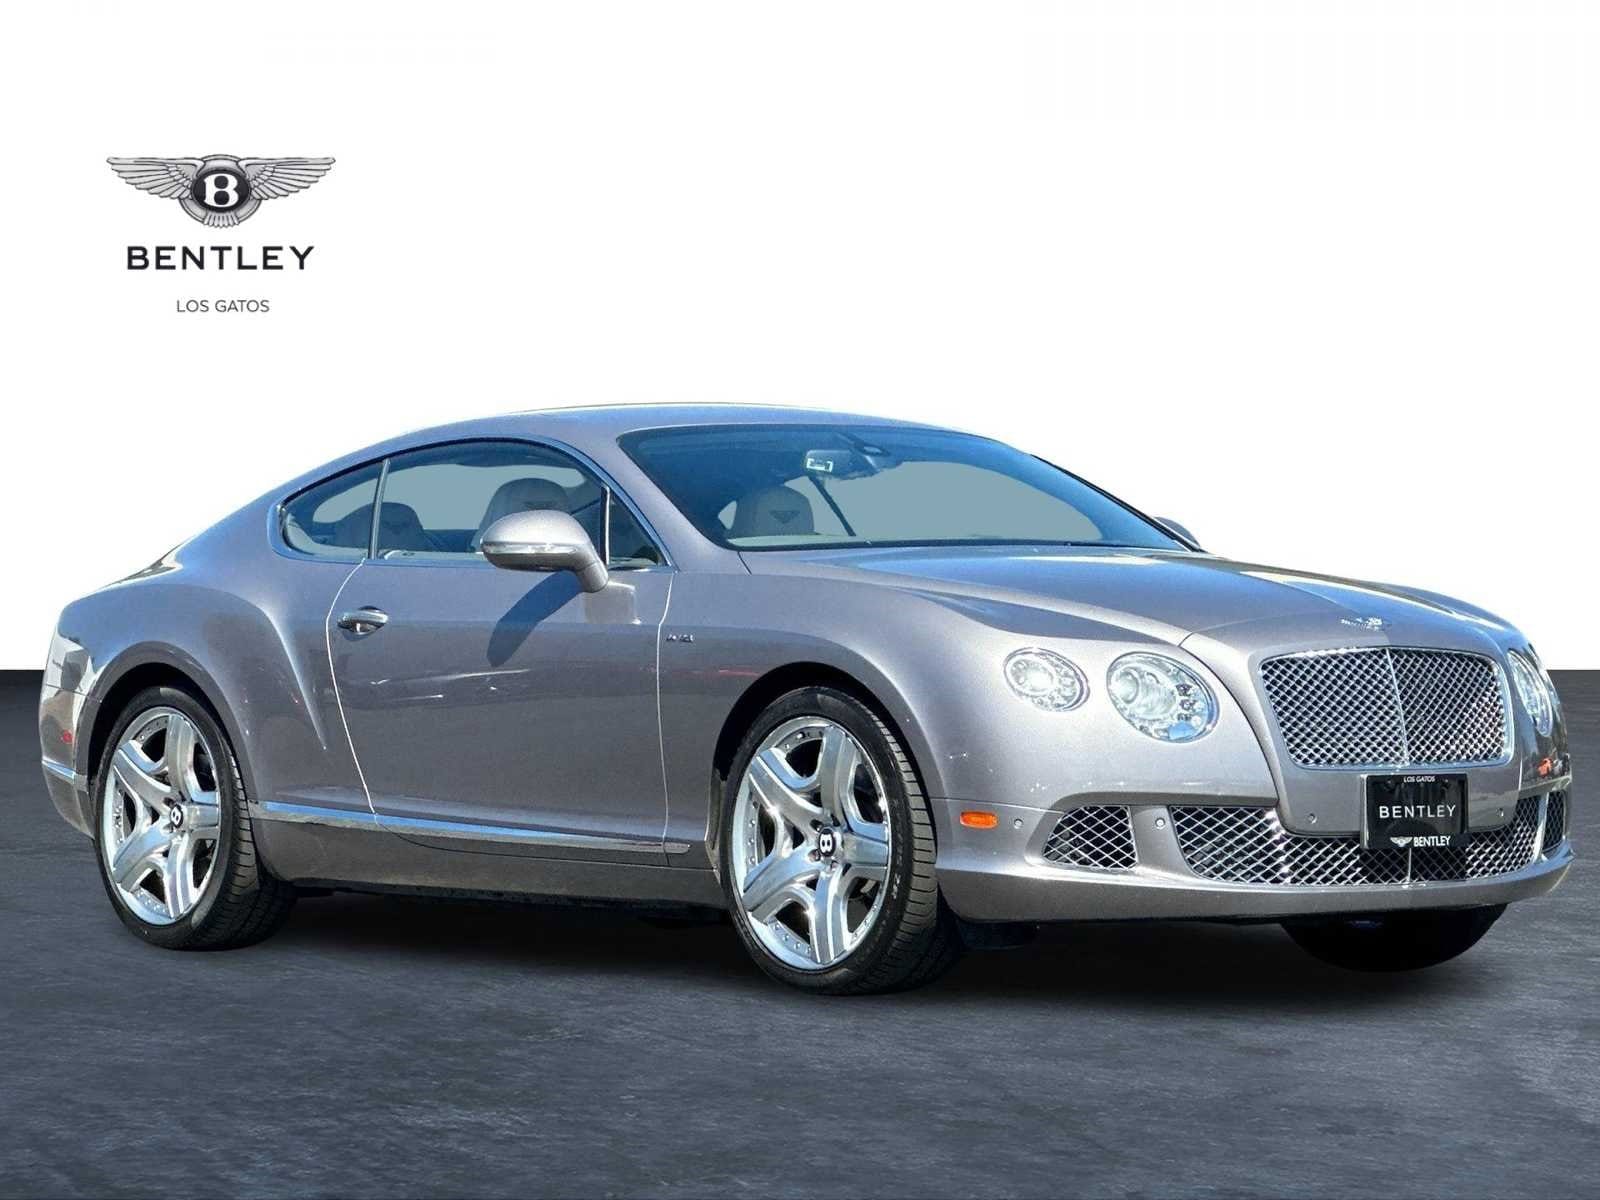 2013 Bentley Continental GT Base